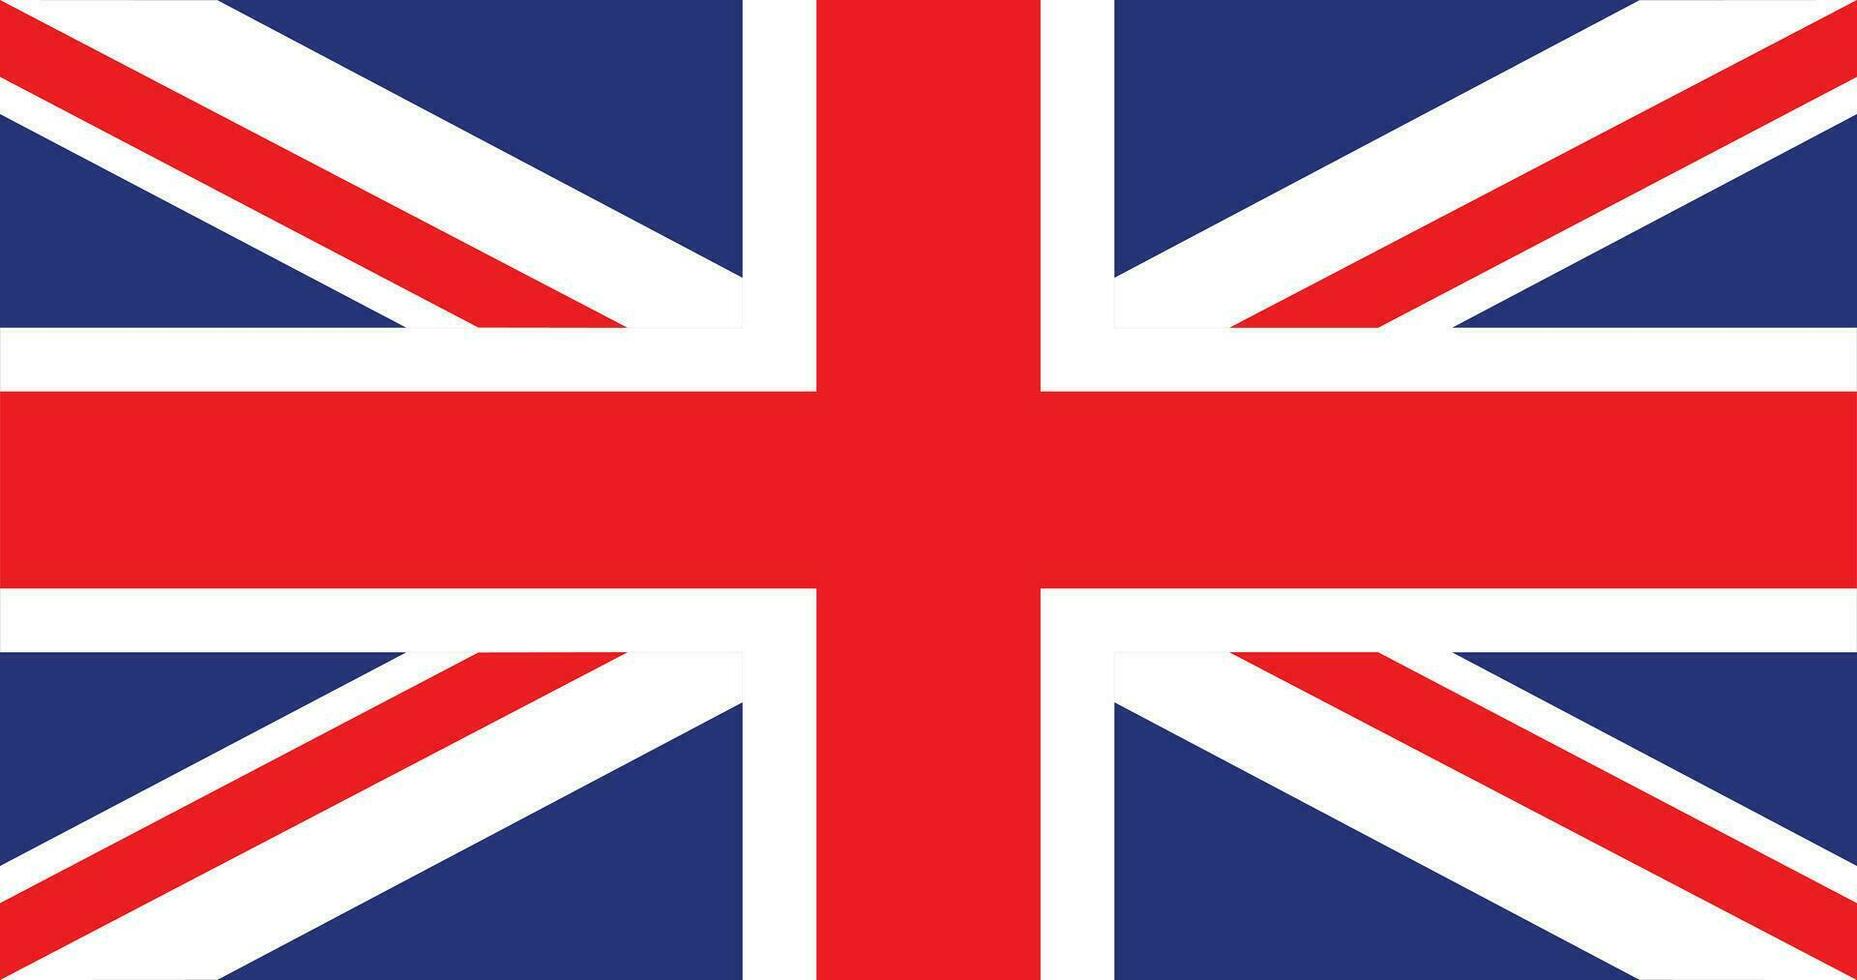 United Kingdom flag, Vector illustration of the United Kingdom flag Free Vector.